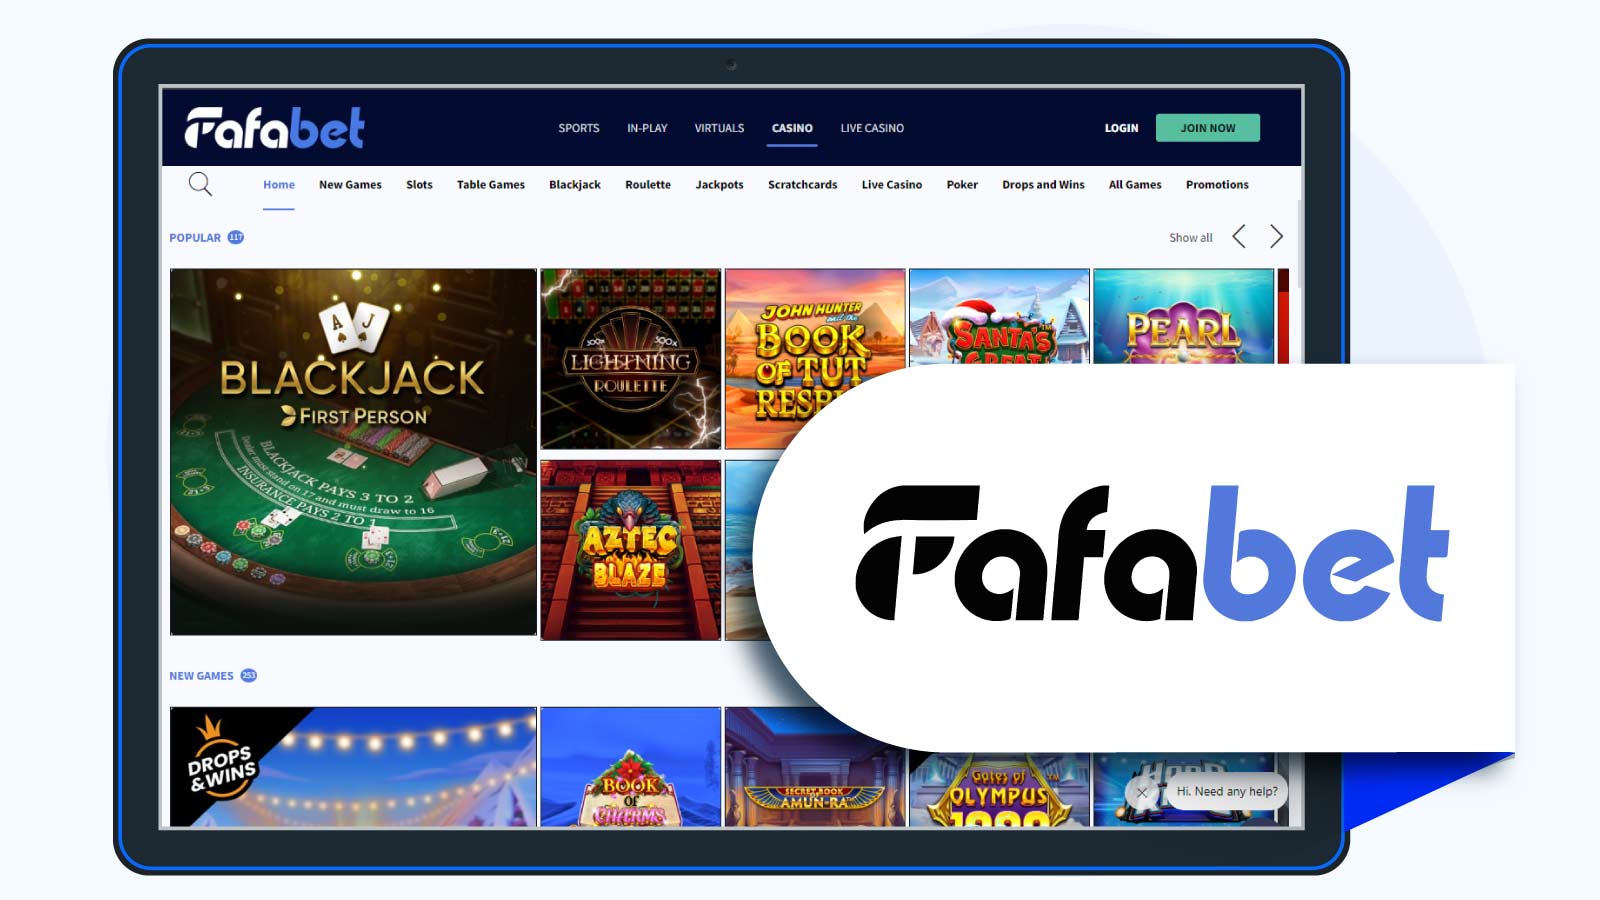 FafaBet-Casino-Gambler’s-Favorite-New-Online-Casino